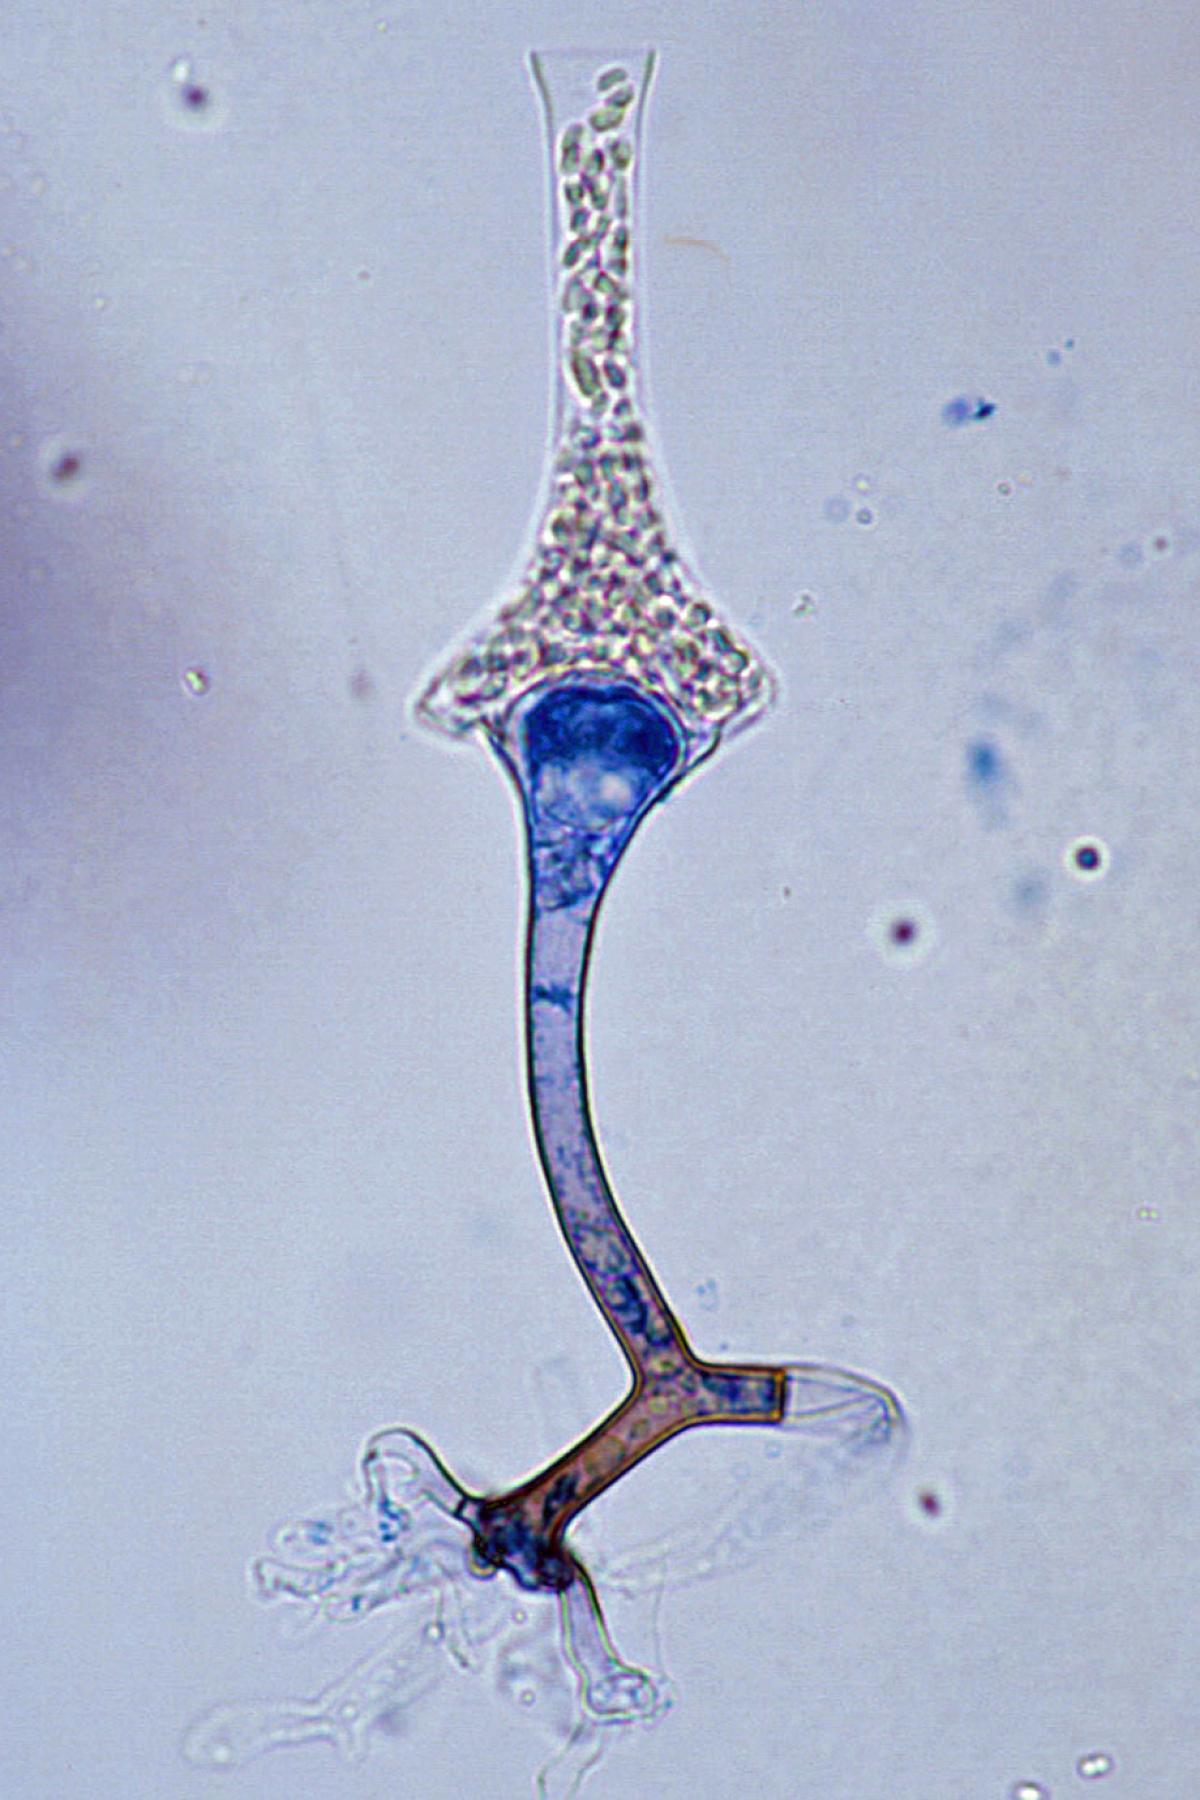 Saksenaea microscopy